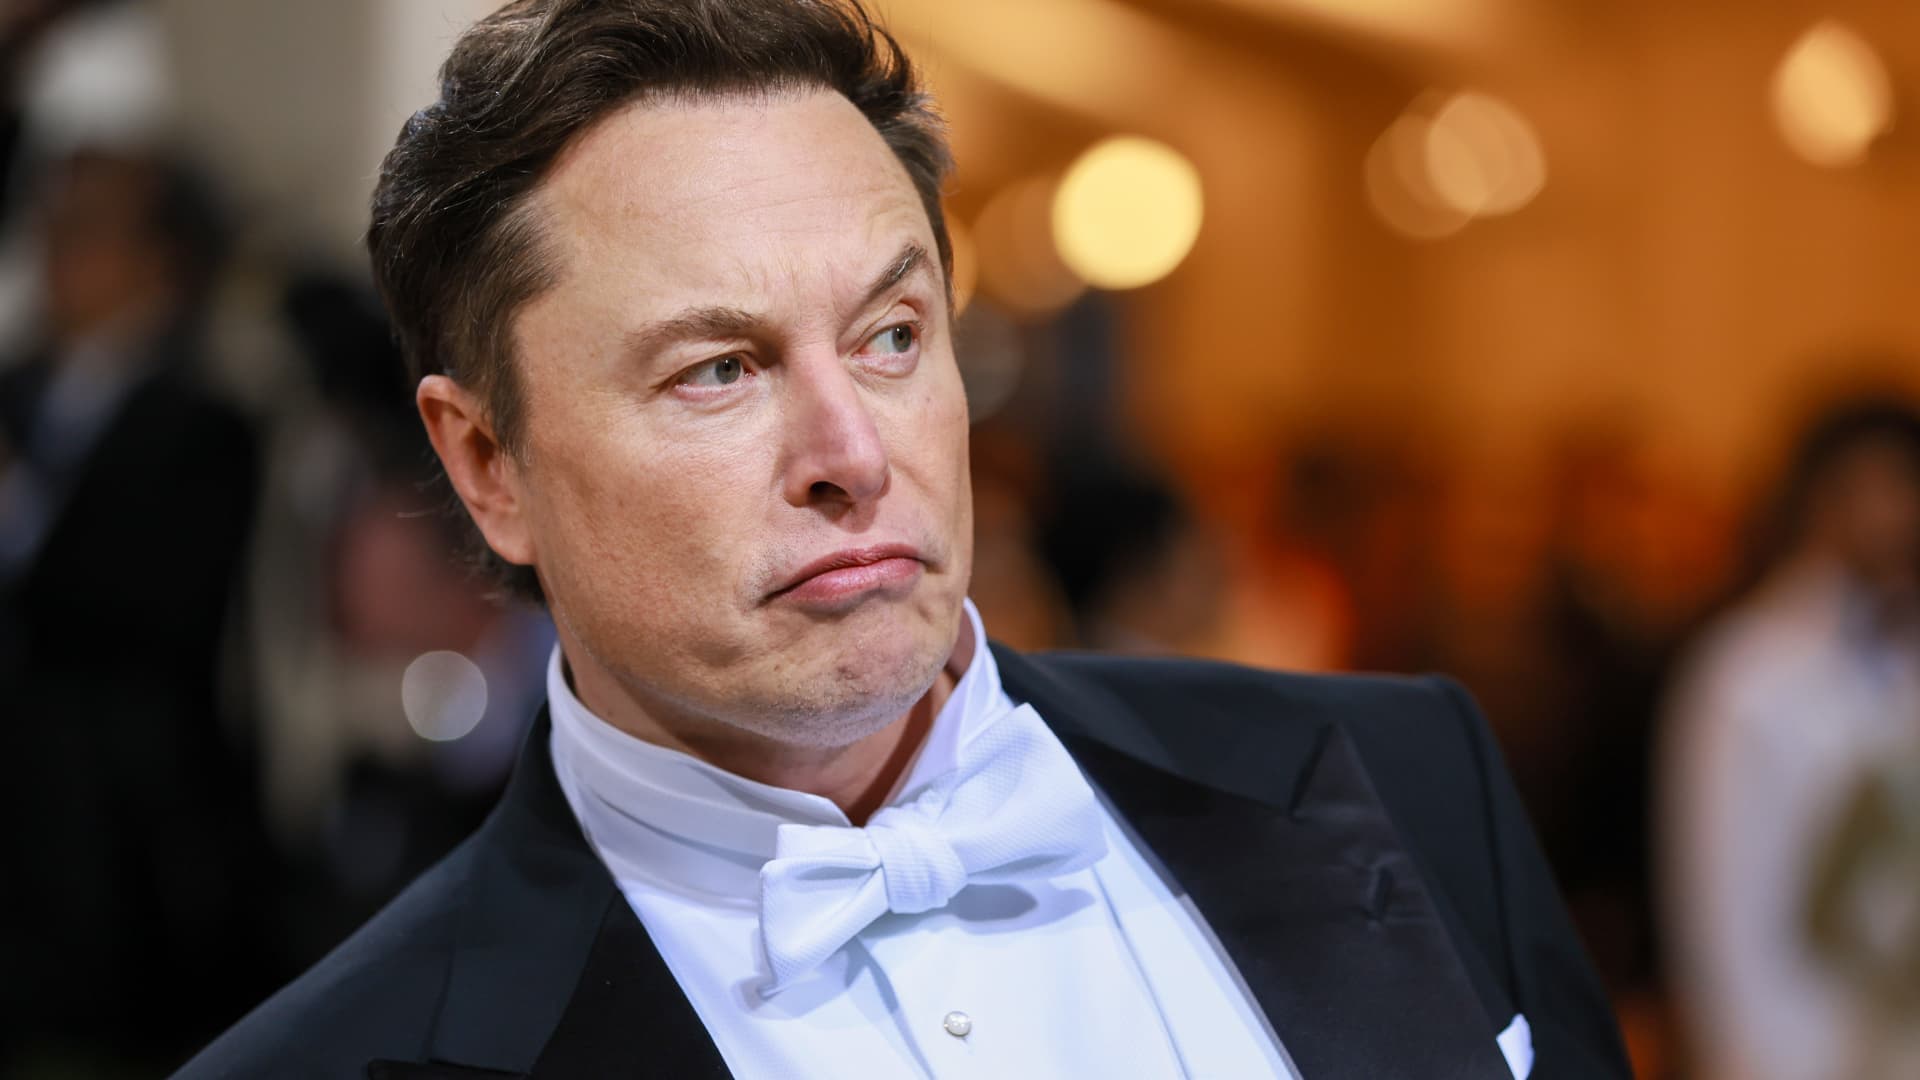 Twitter slips on report that Musk deal is in jeopardy